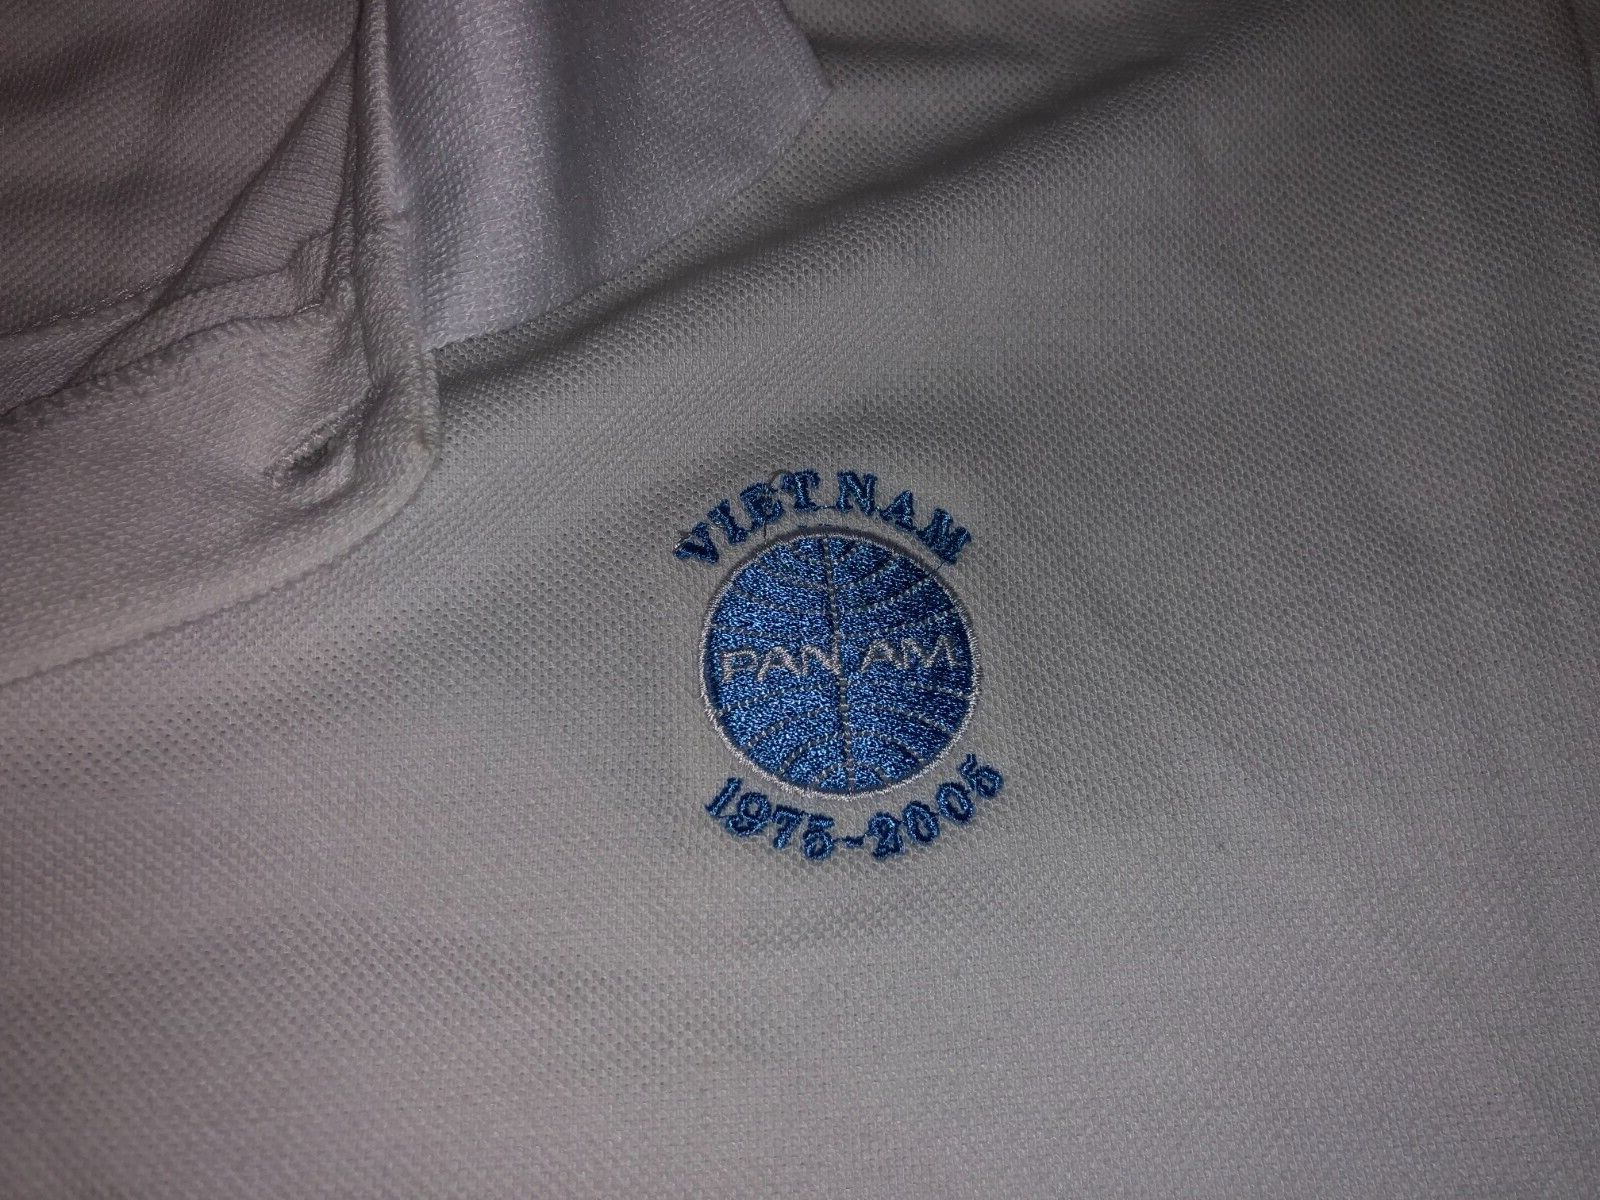 PAN AM Airlines VIETNAM 1975-2005 Polo Shirt XLarge